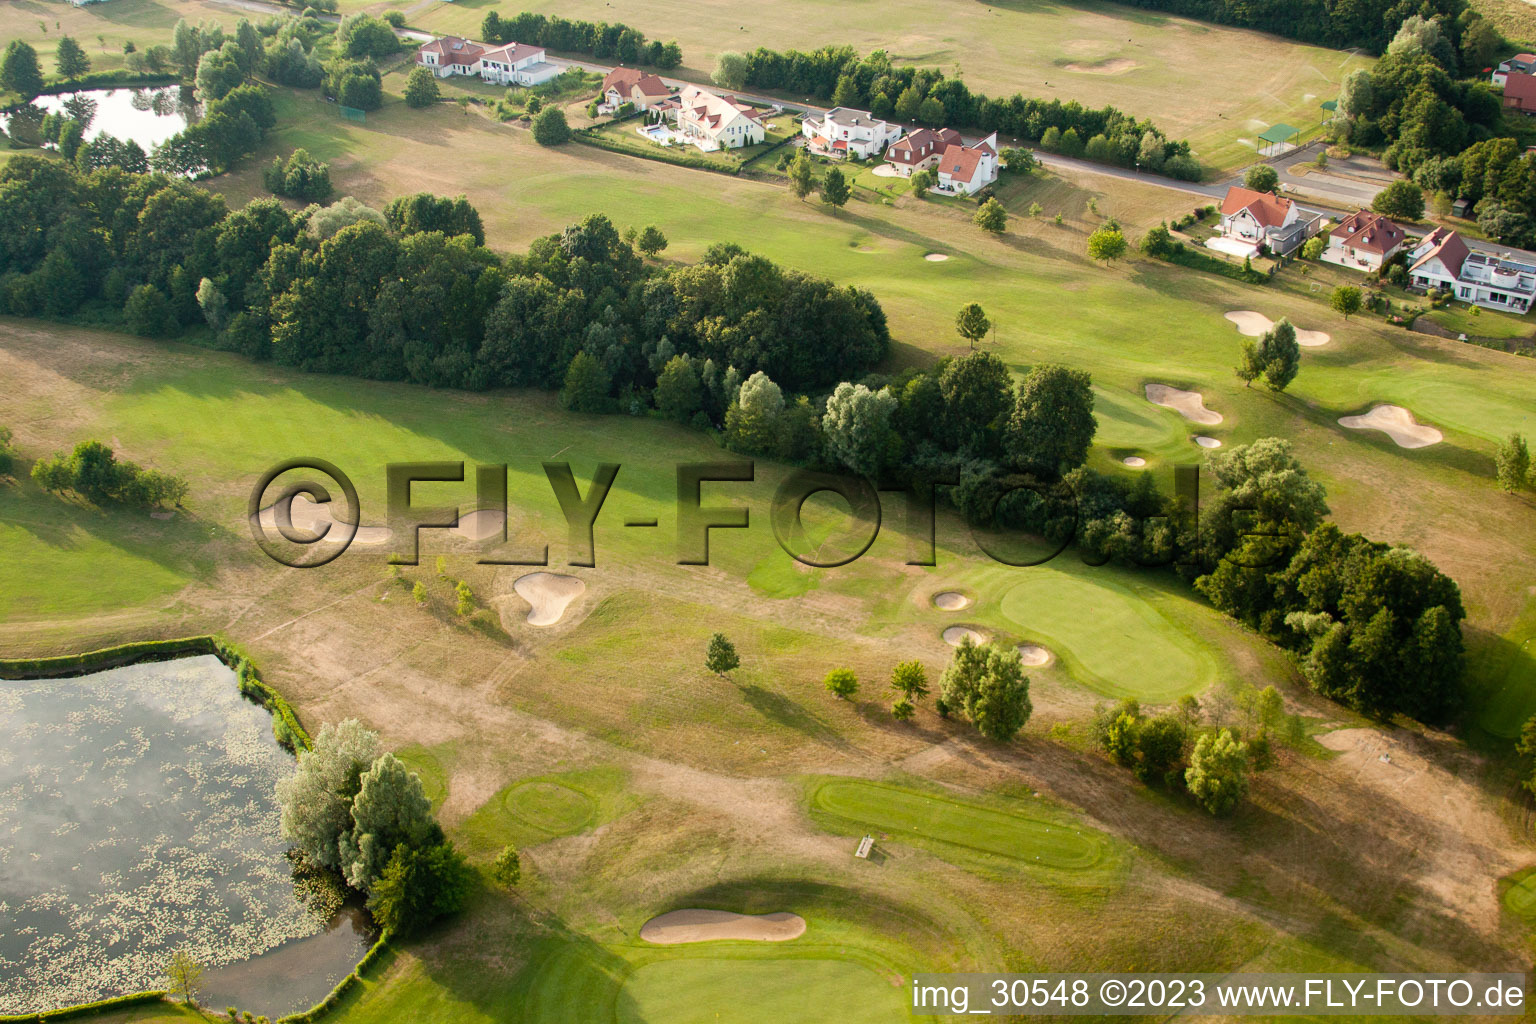 Golf club Soufflenheim Baden-Baden in Soufflenheim in the state Bas-Rhin, France viewn from the air